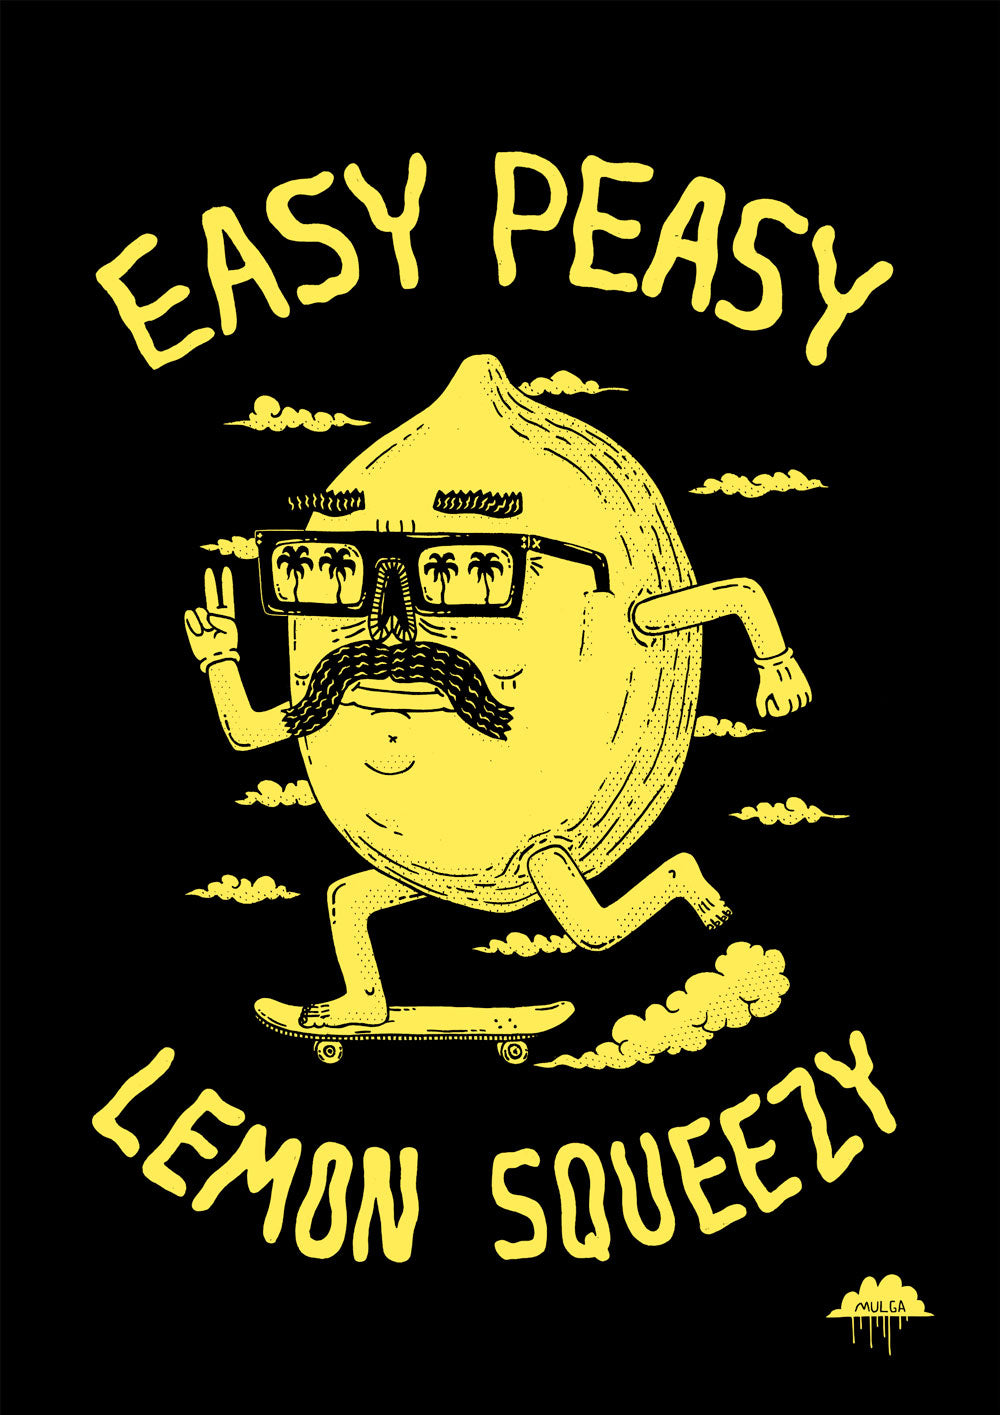 Easy Peasy Lemon Squeezy Dictionary - Kaigozen - Digital Art